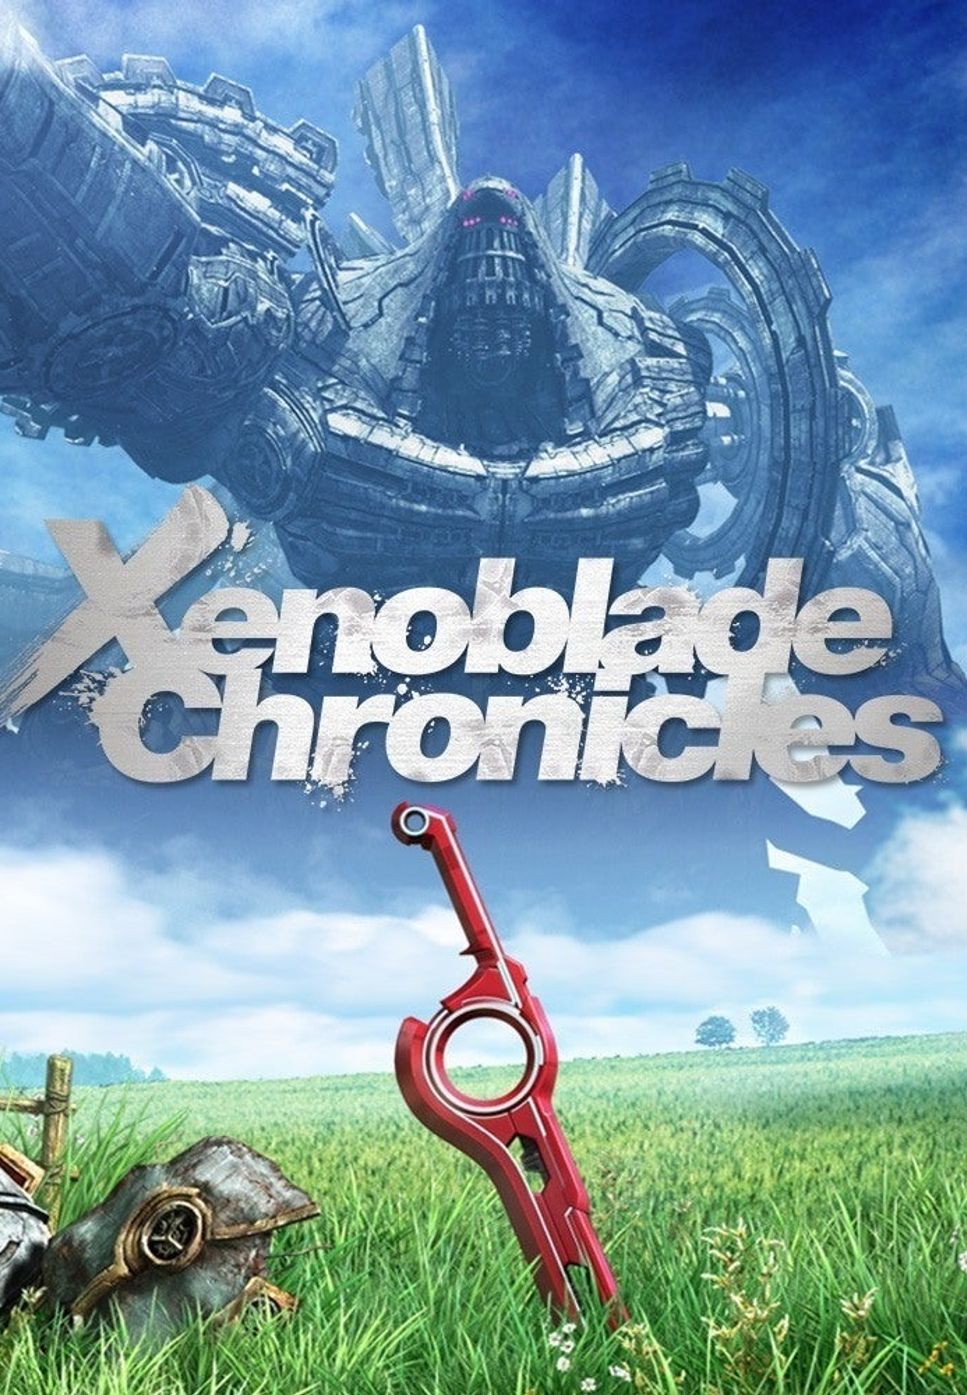 Xenoblade Chronicles - Satorl Marsh by Pei-Ying Pan